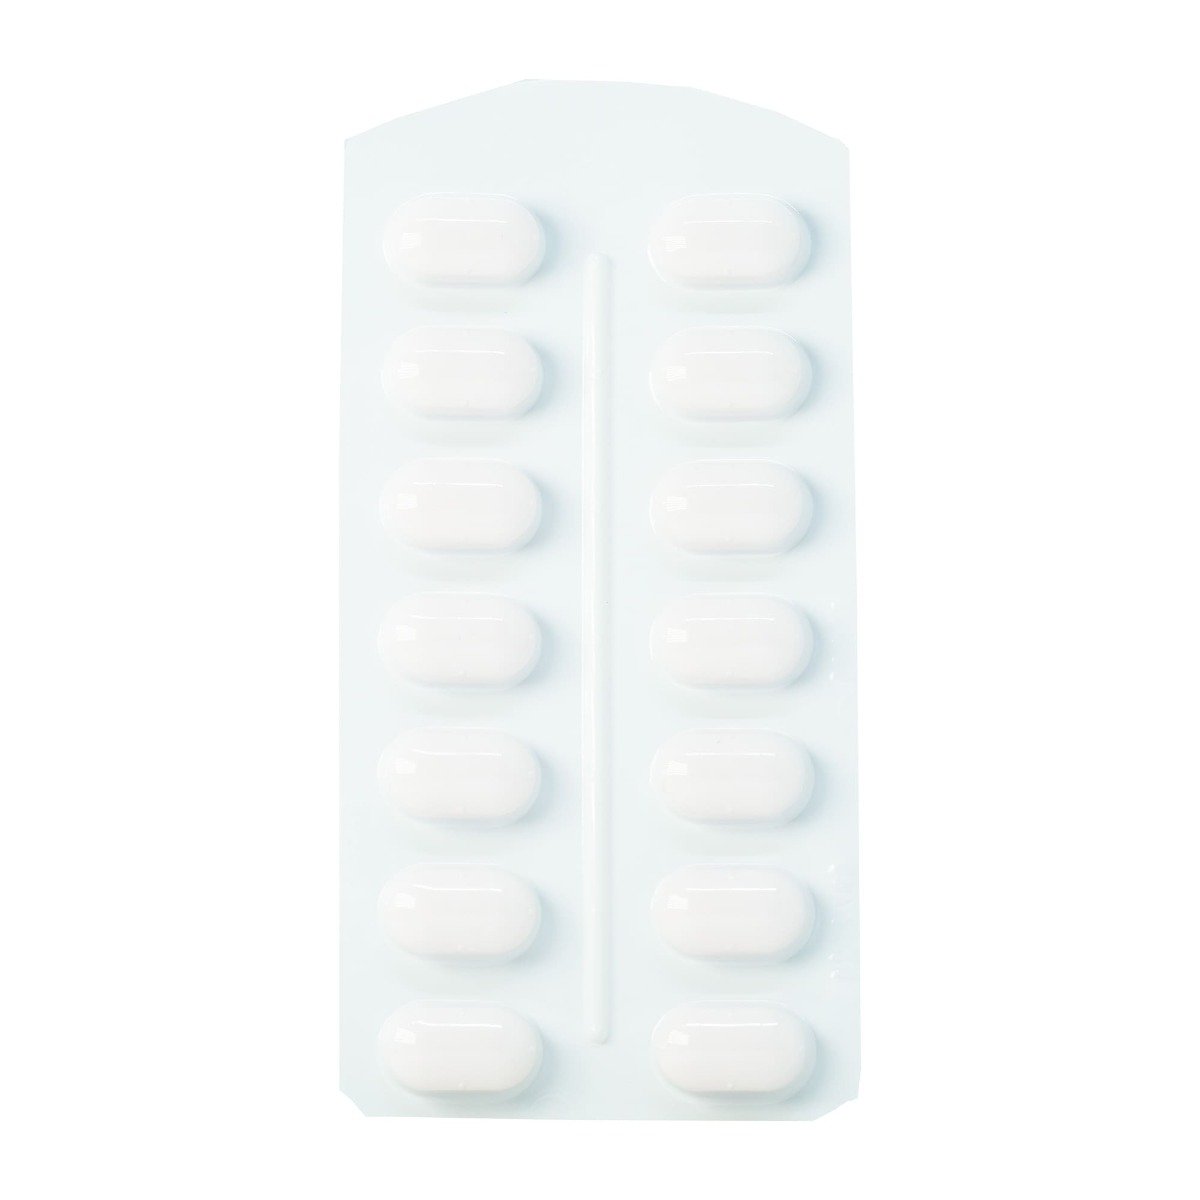 Co Aprovel 300 mg-12.5 mg - 14 Tablets - Bloom Pharmacy